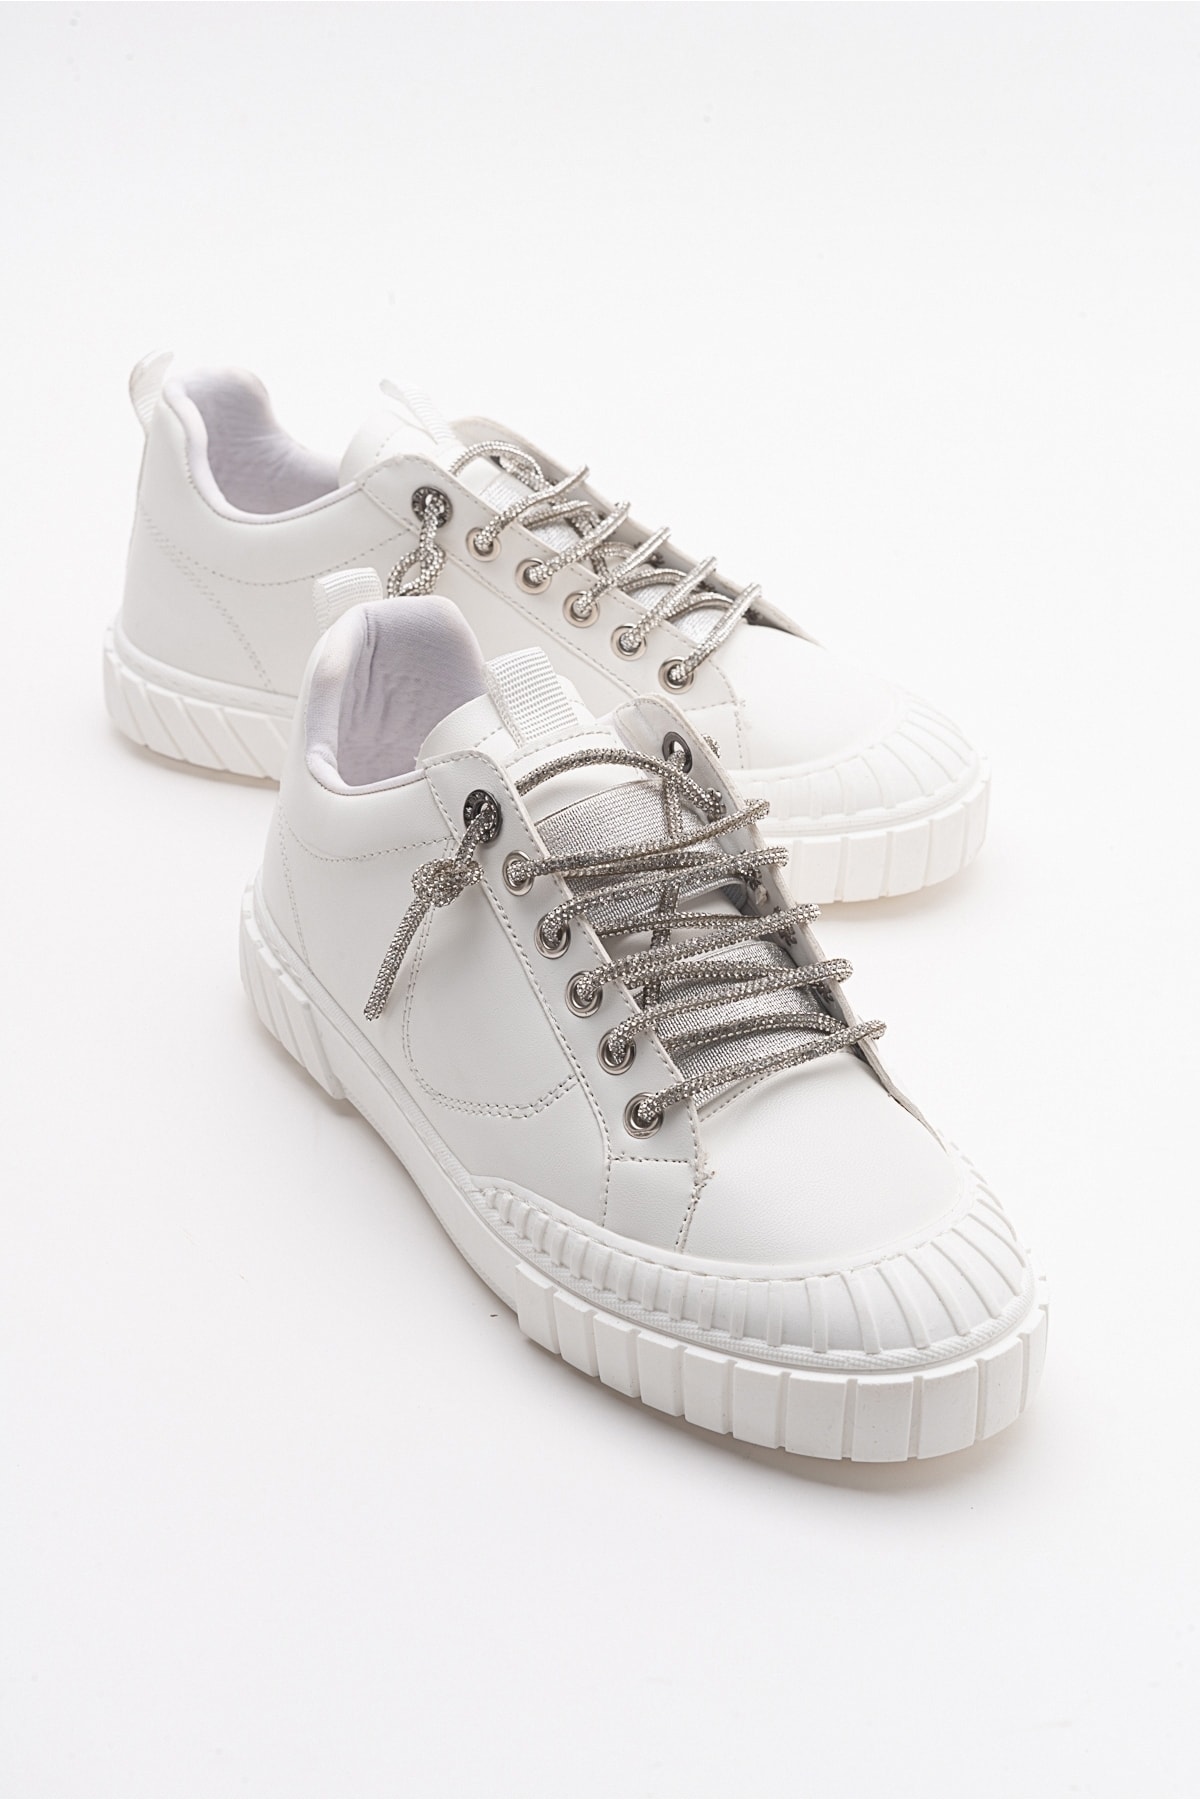 LuviShoes Magia White Skin Women's Sneakers